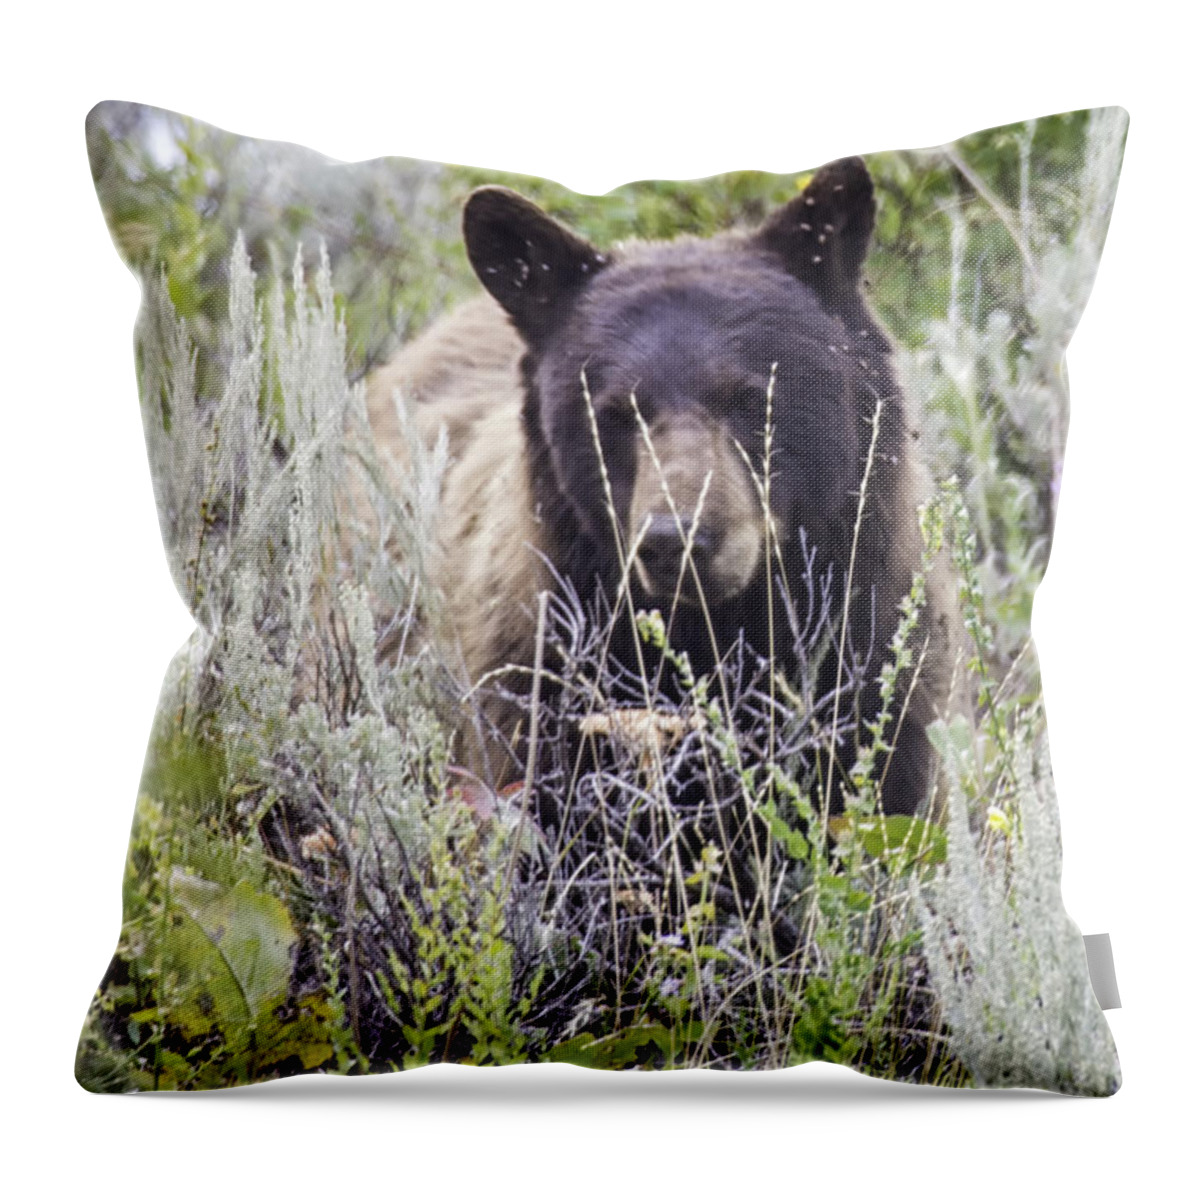 Cinnamon Black Bear Throw Pillow For Sale By Carolyn Fox